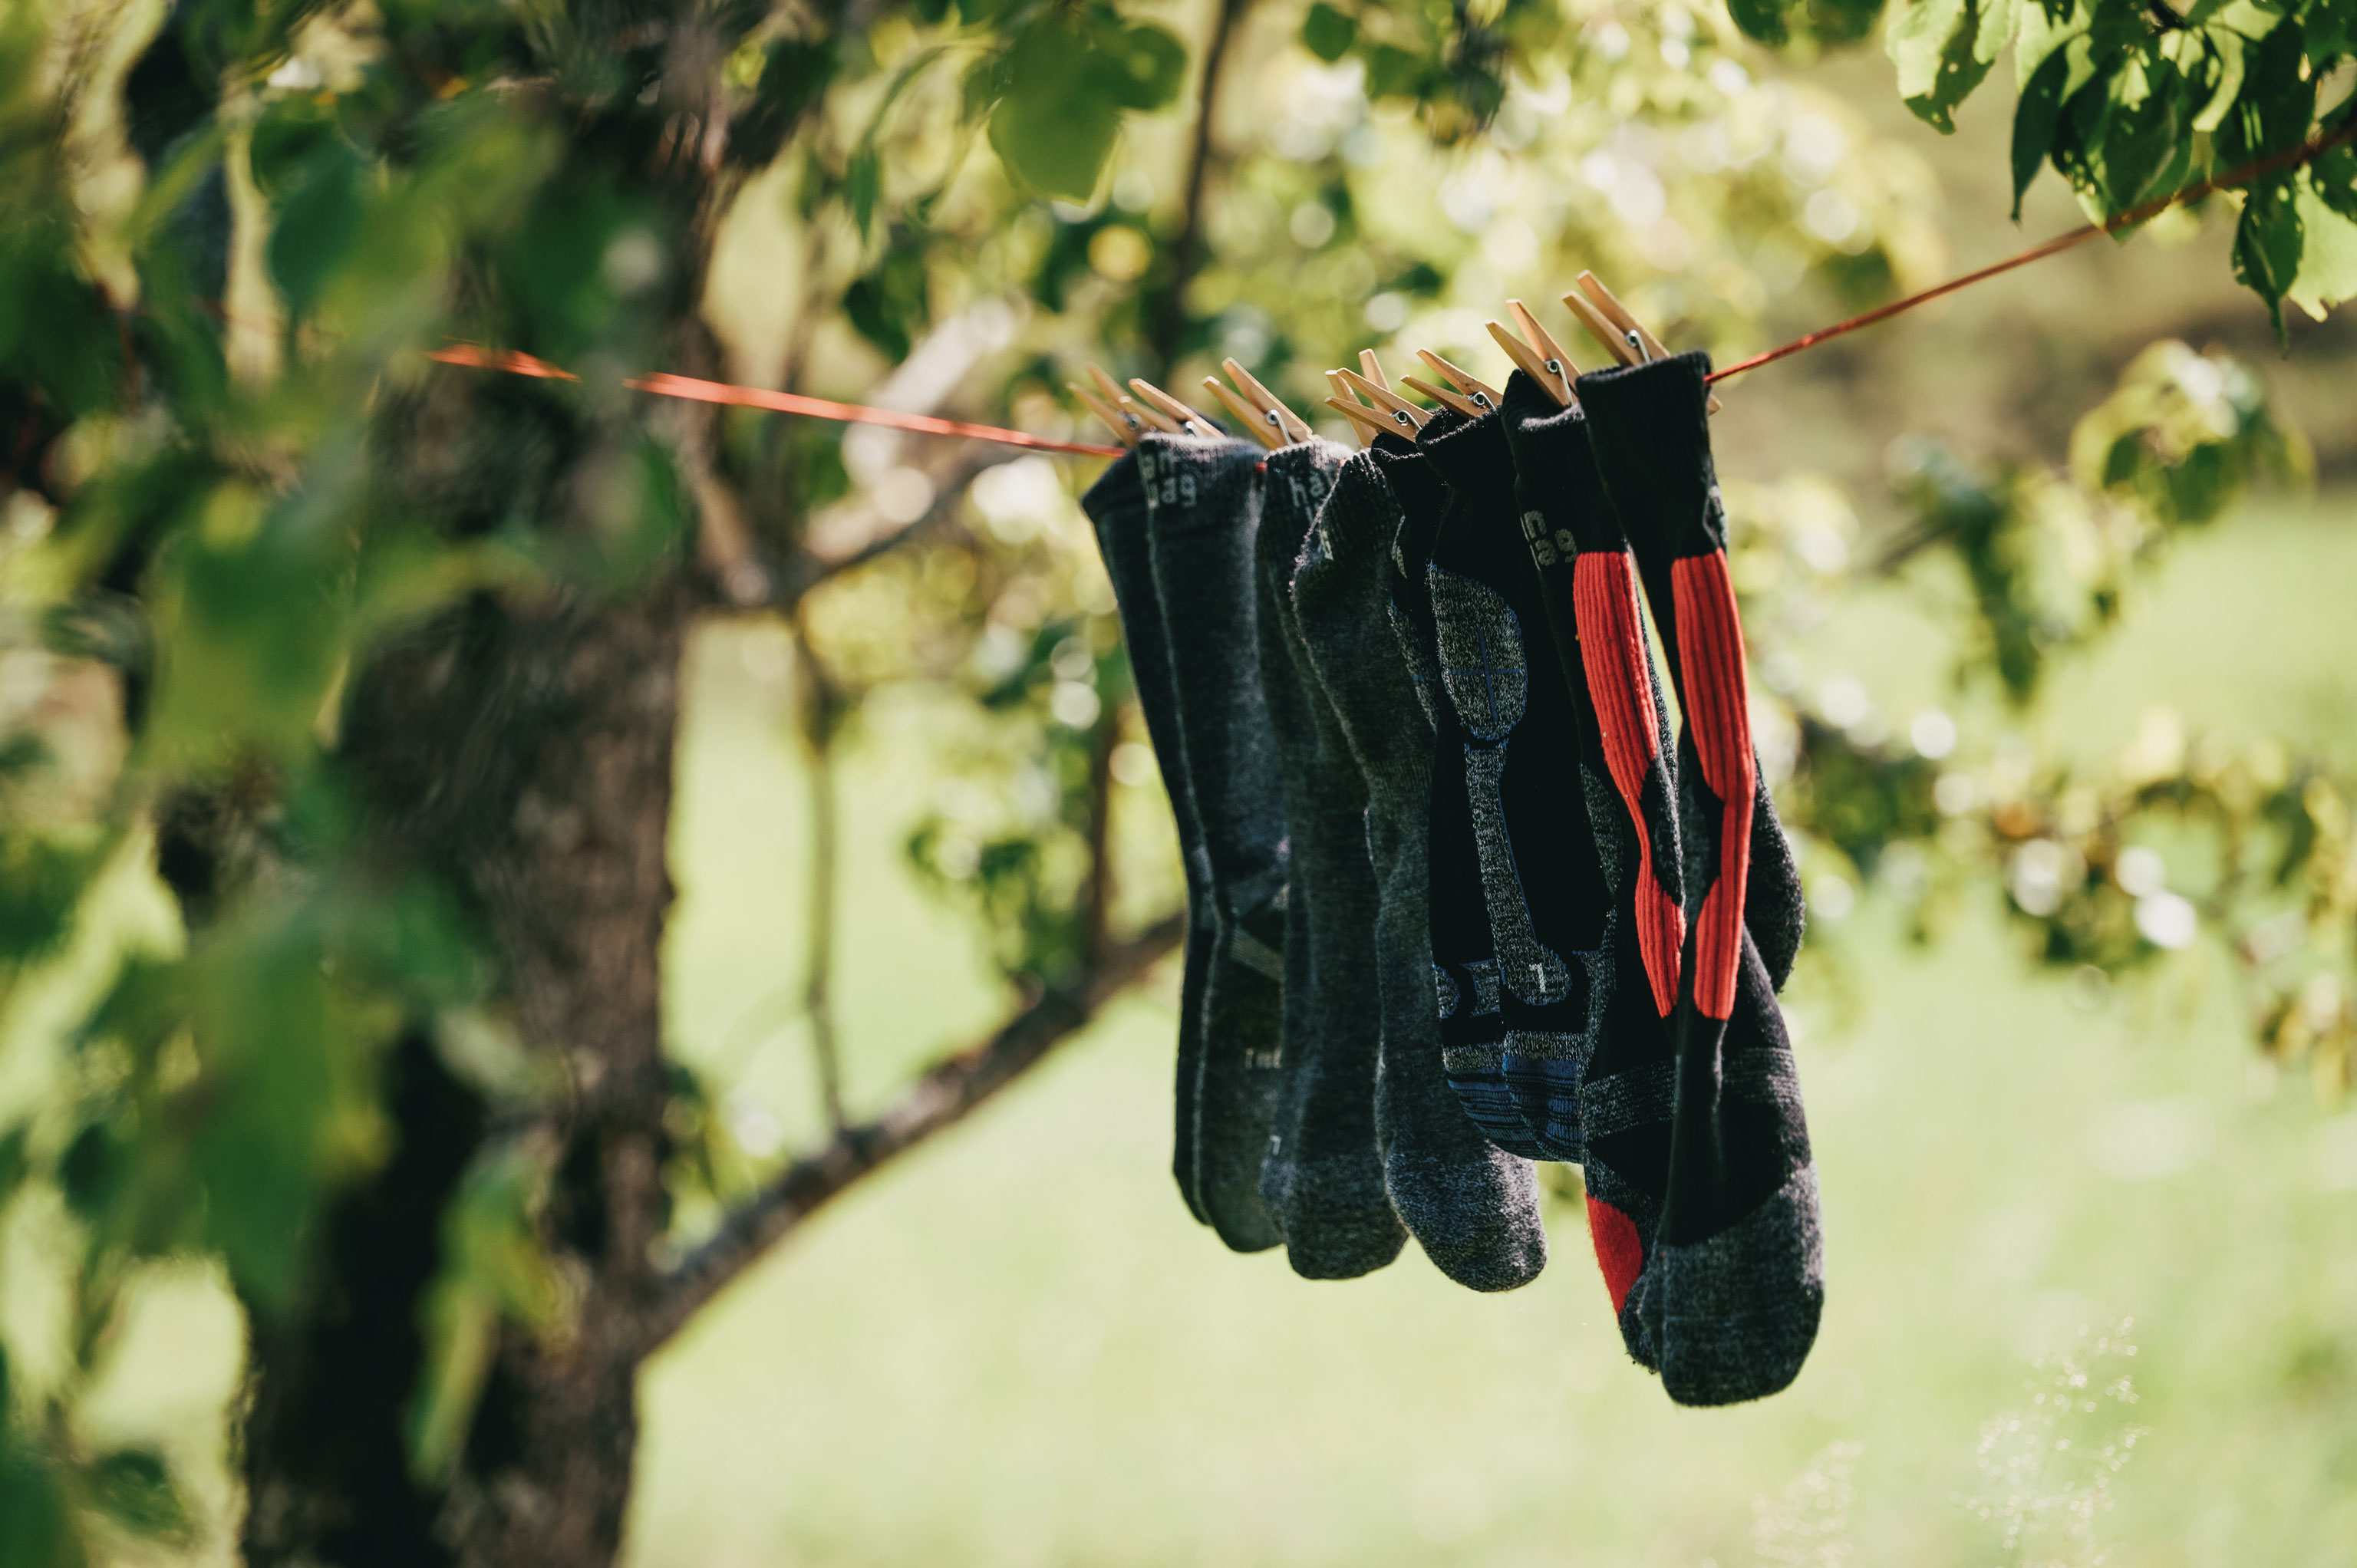 Washing your hiking socks washing line